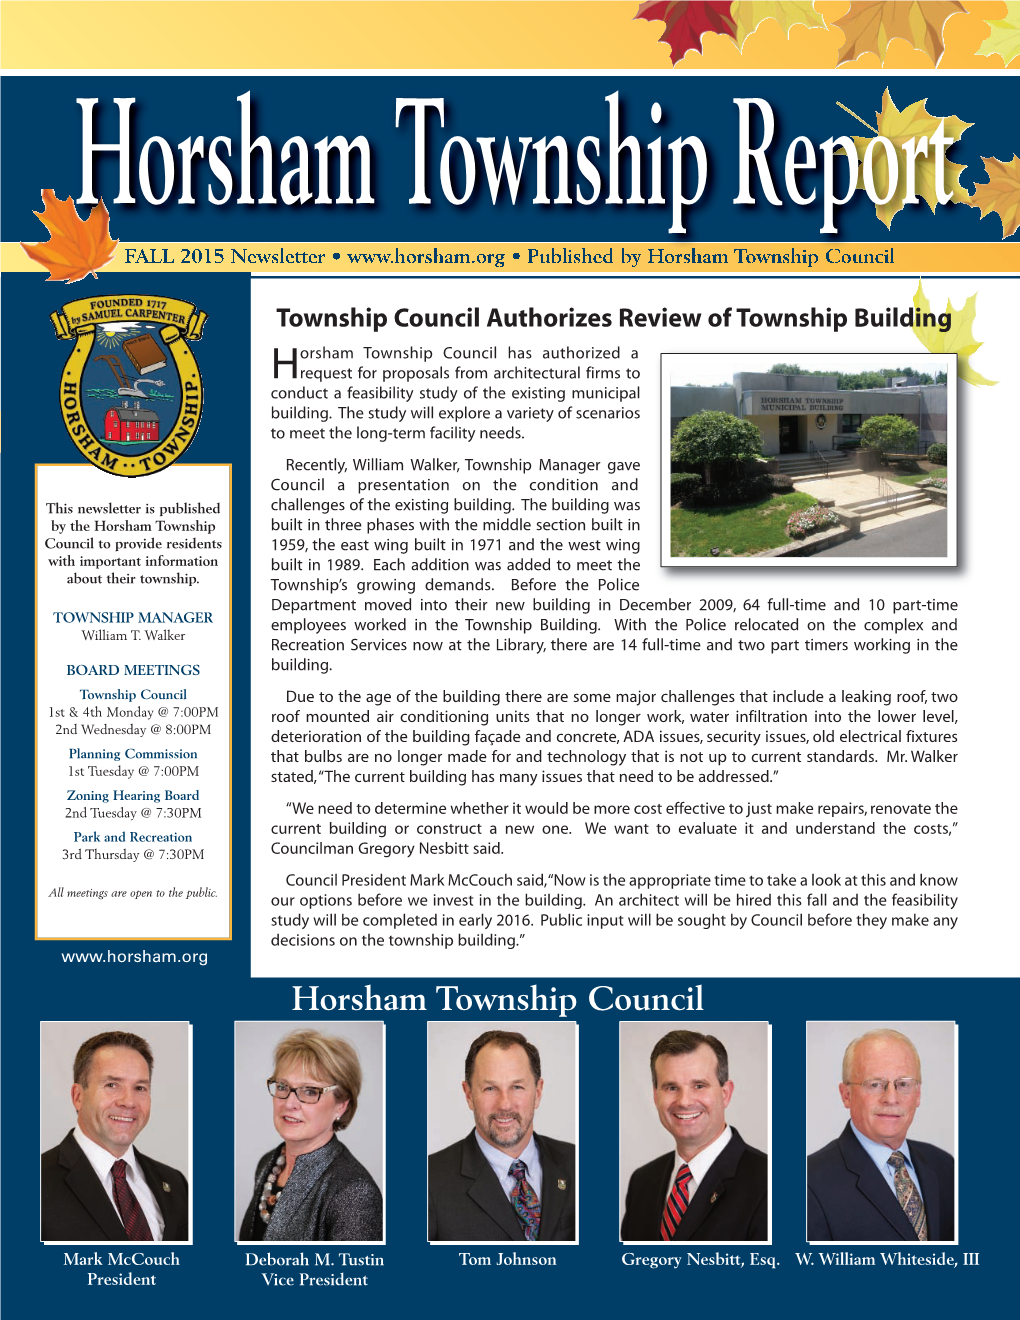 Horsham Township Council